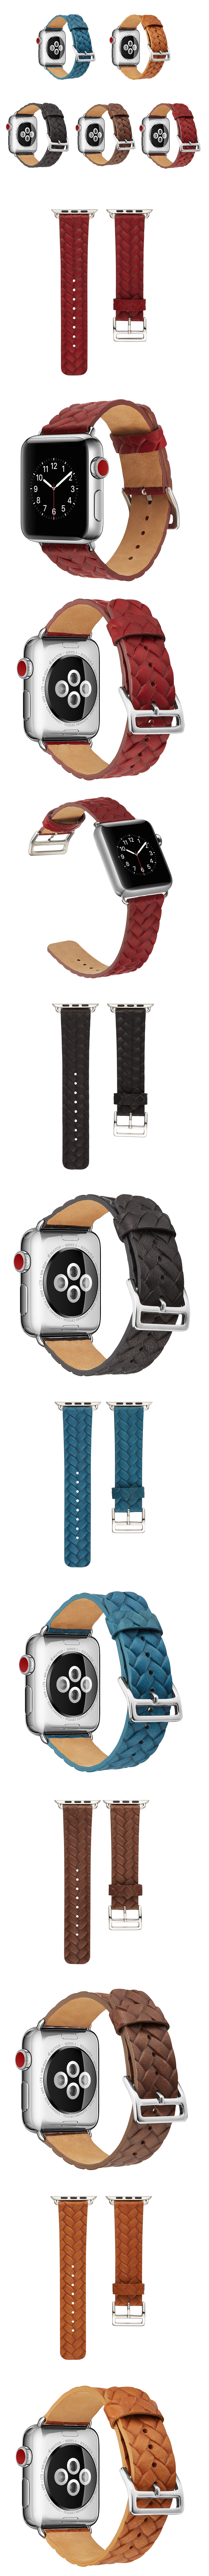 880-Watch-頭層牛皮真皮錶帶編織壓紋設計皮革錶帶